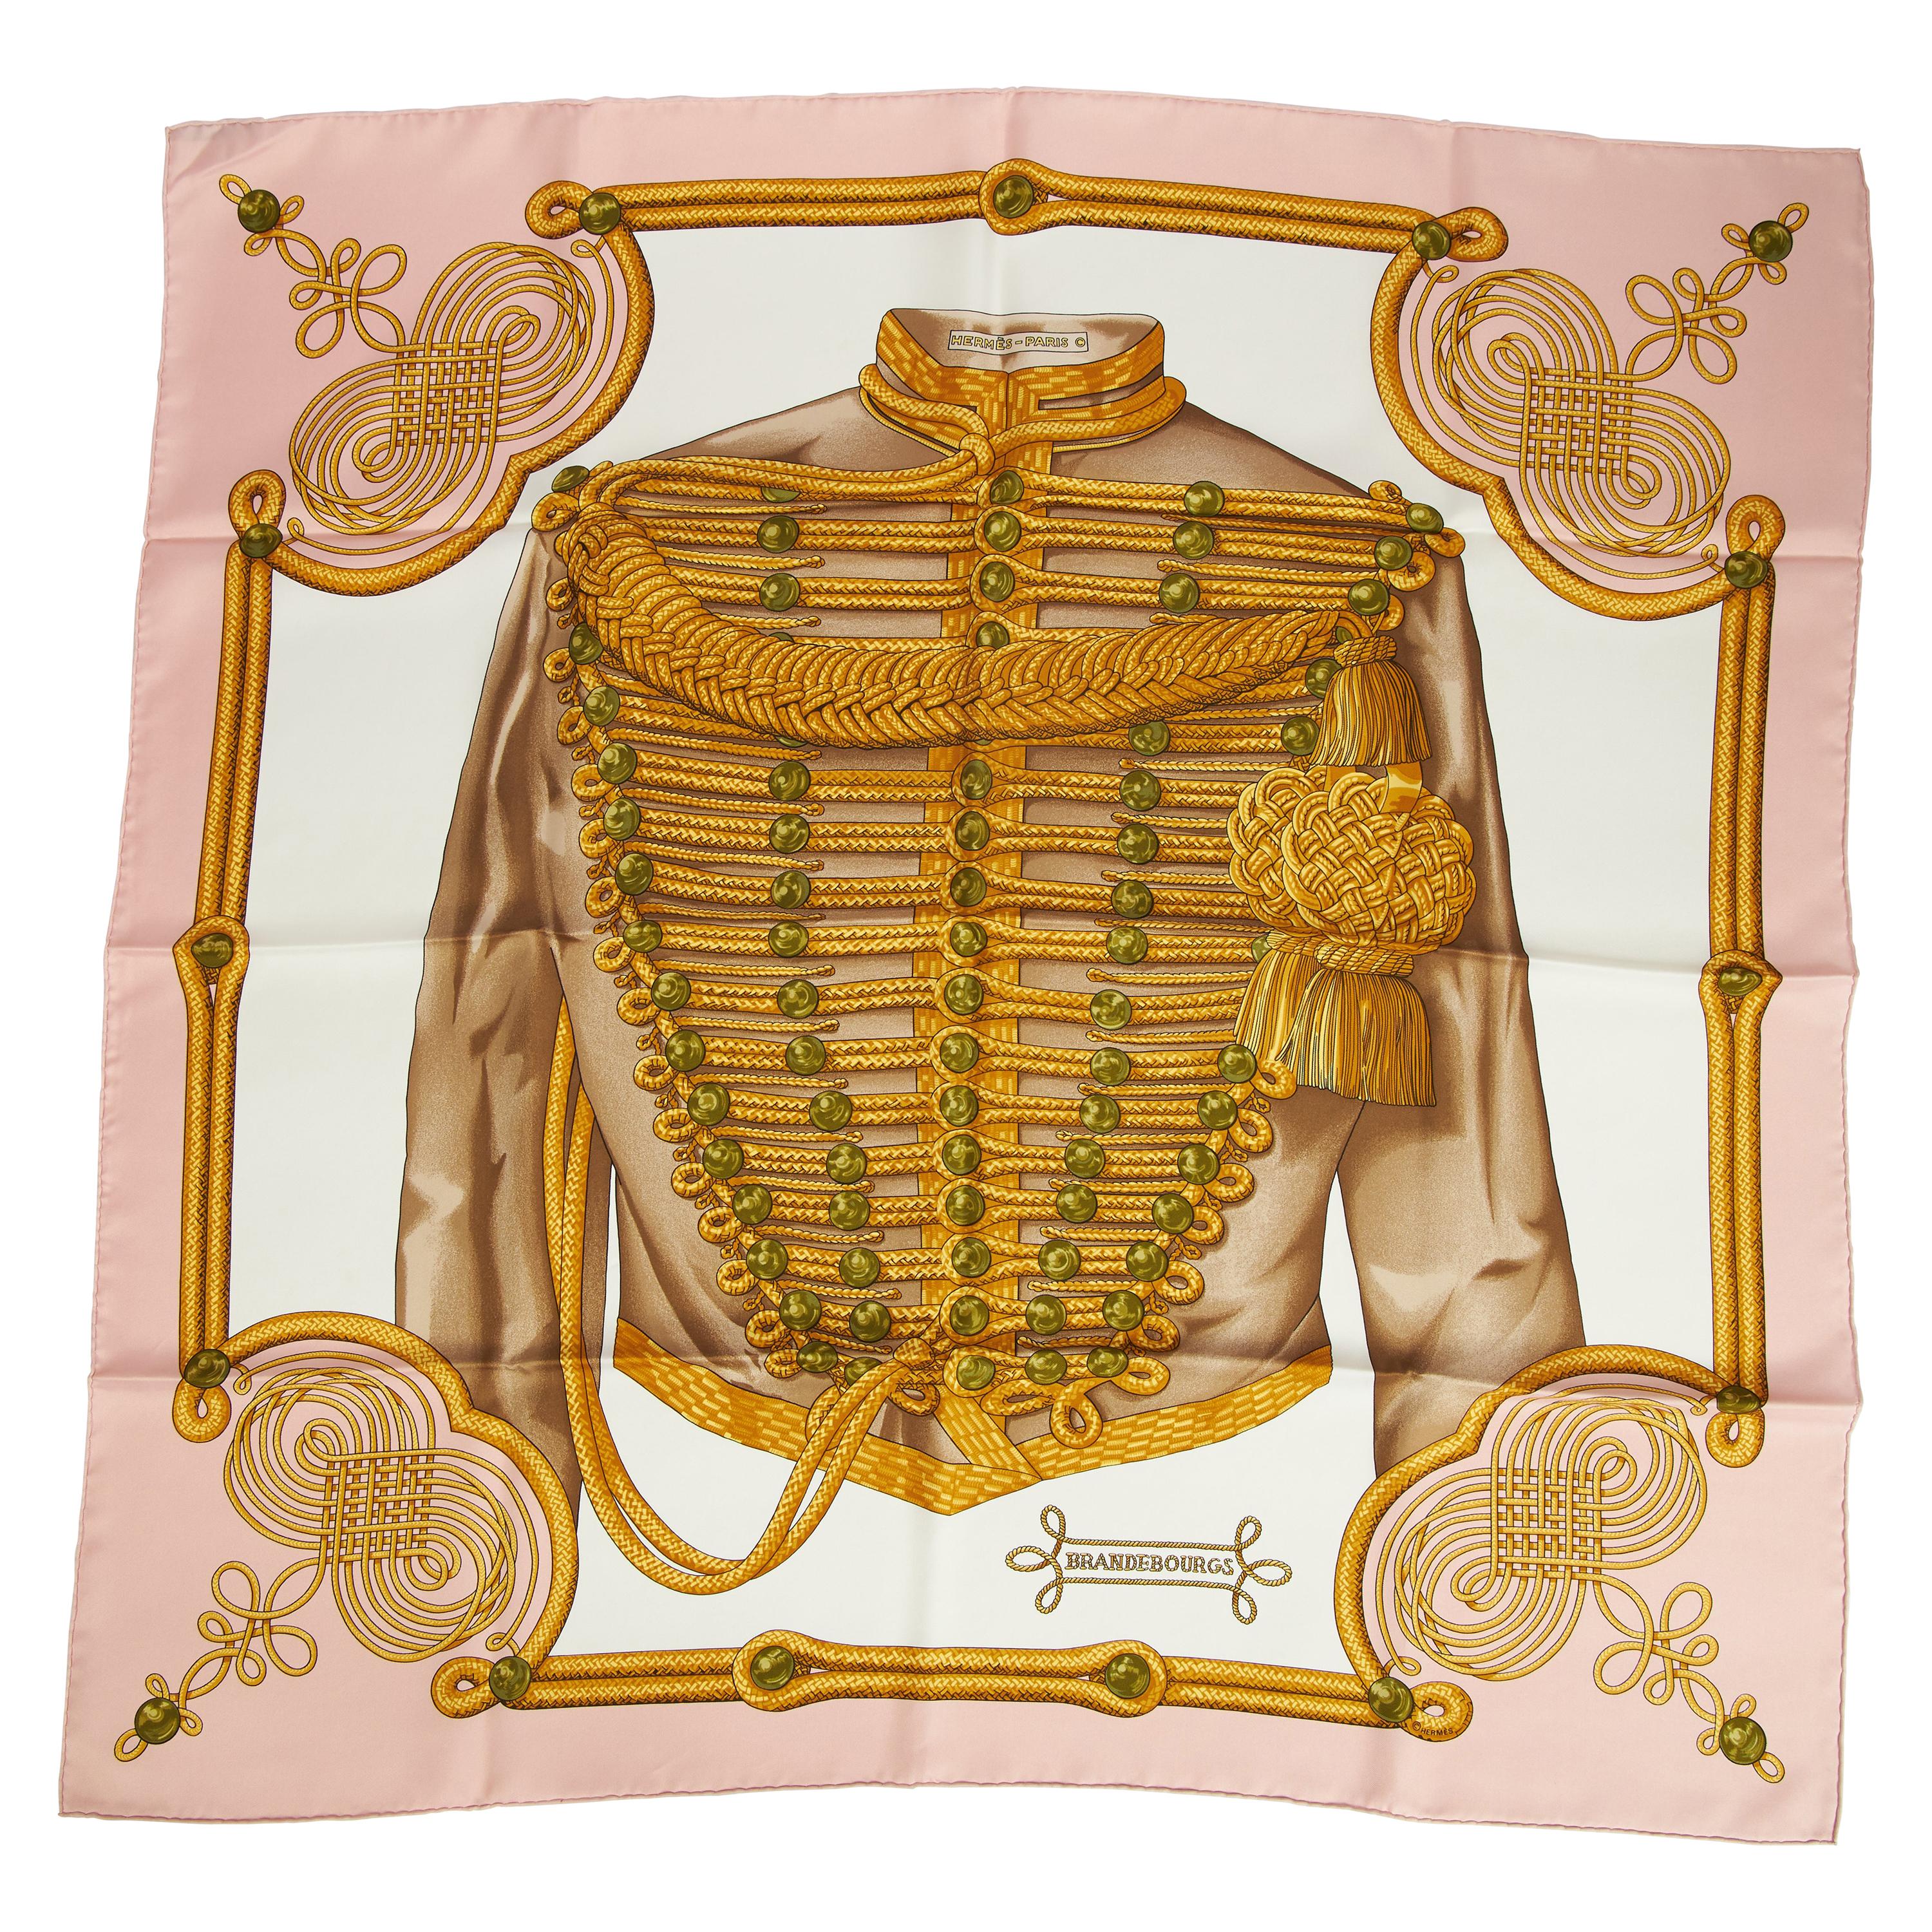 New in Box Hermès Brandebourgs Silk Twill Scarf